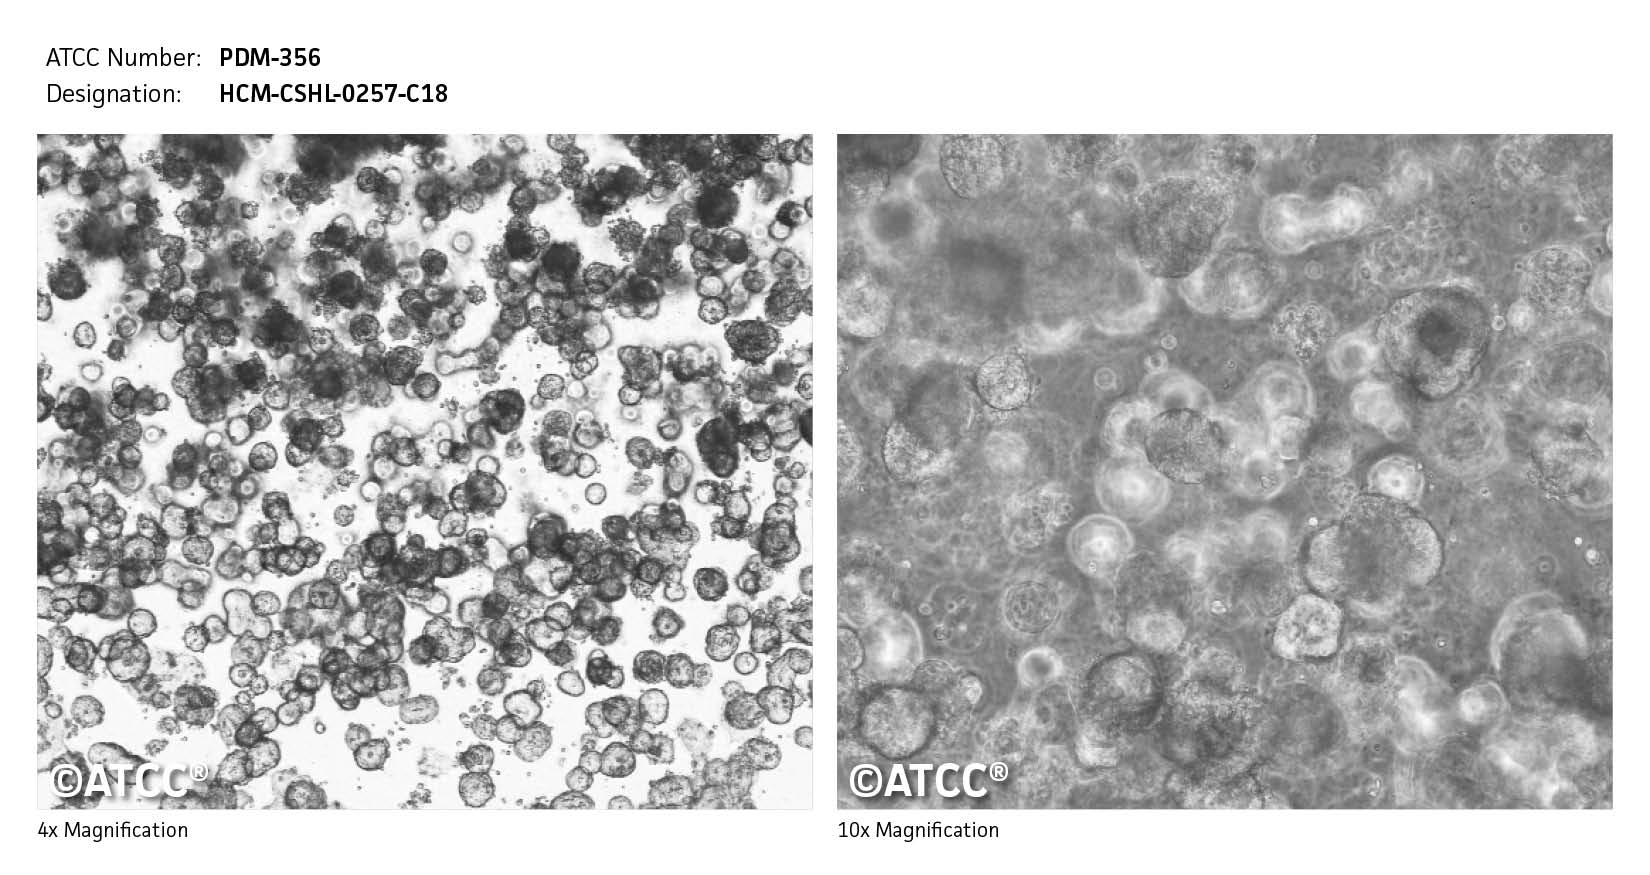 ATCC PDM-356 Cell Micrograph